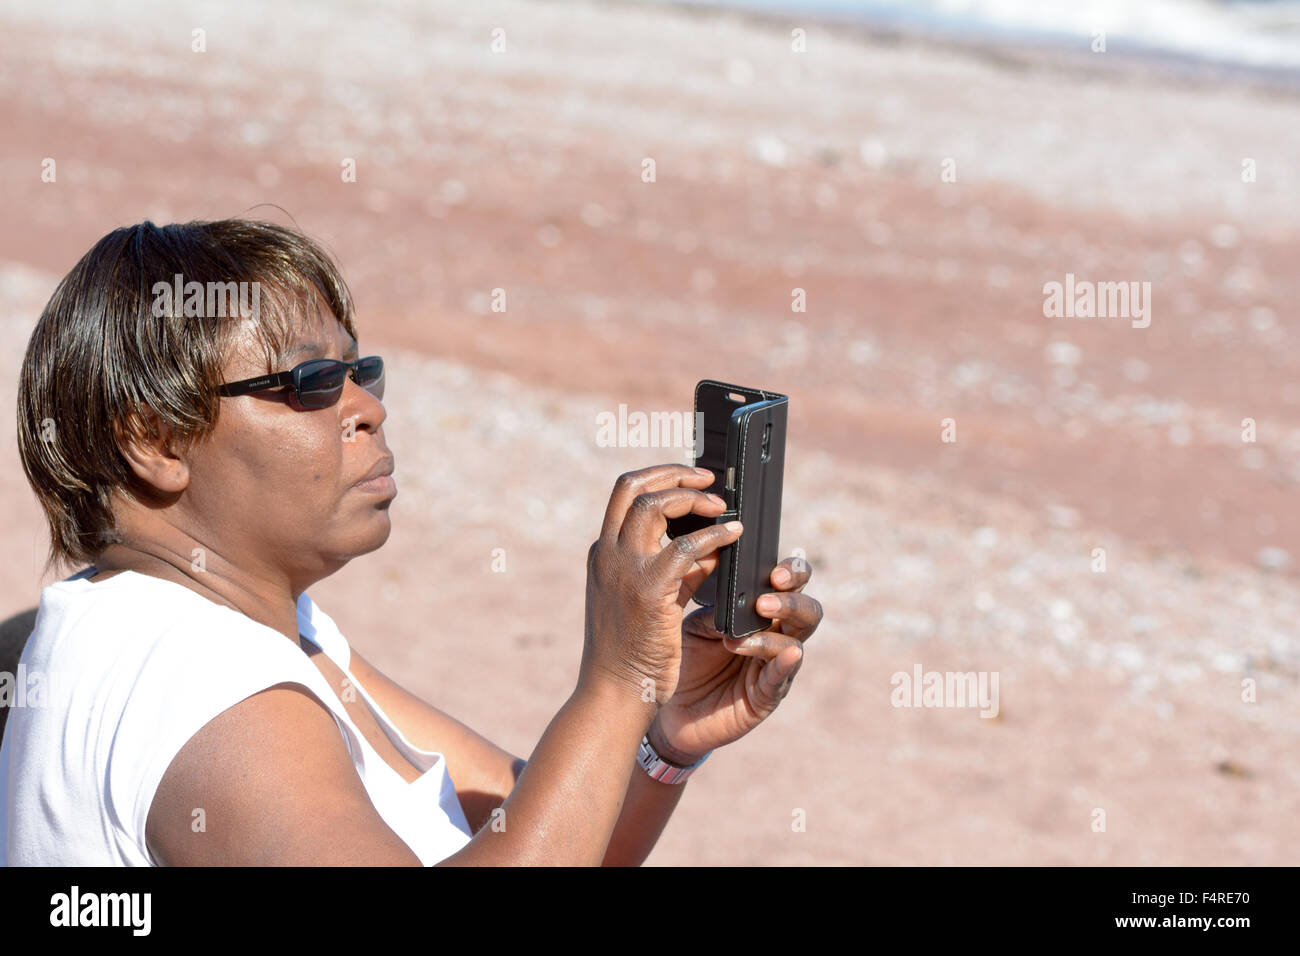 Woman taking holiday memento photos on her mobile phone of Oddicombe Beach, Torquay, Devon, England Stock Photo